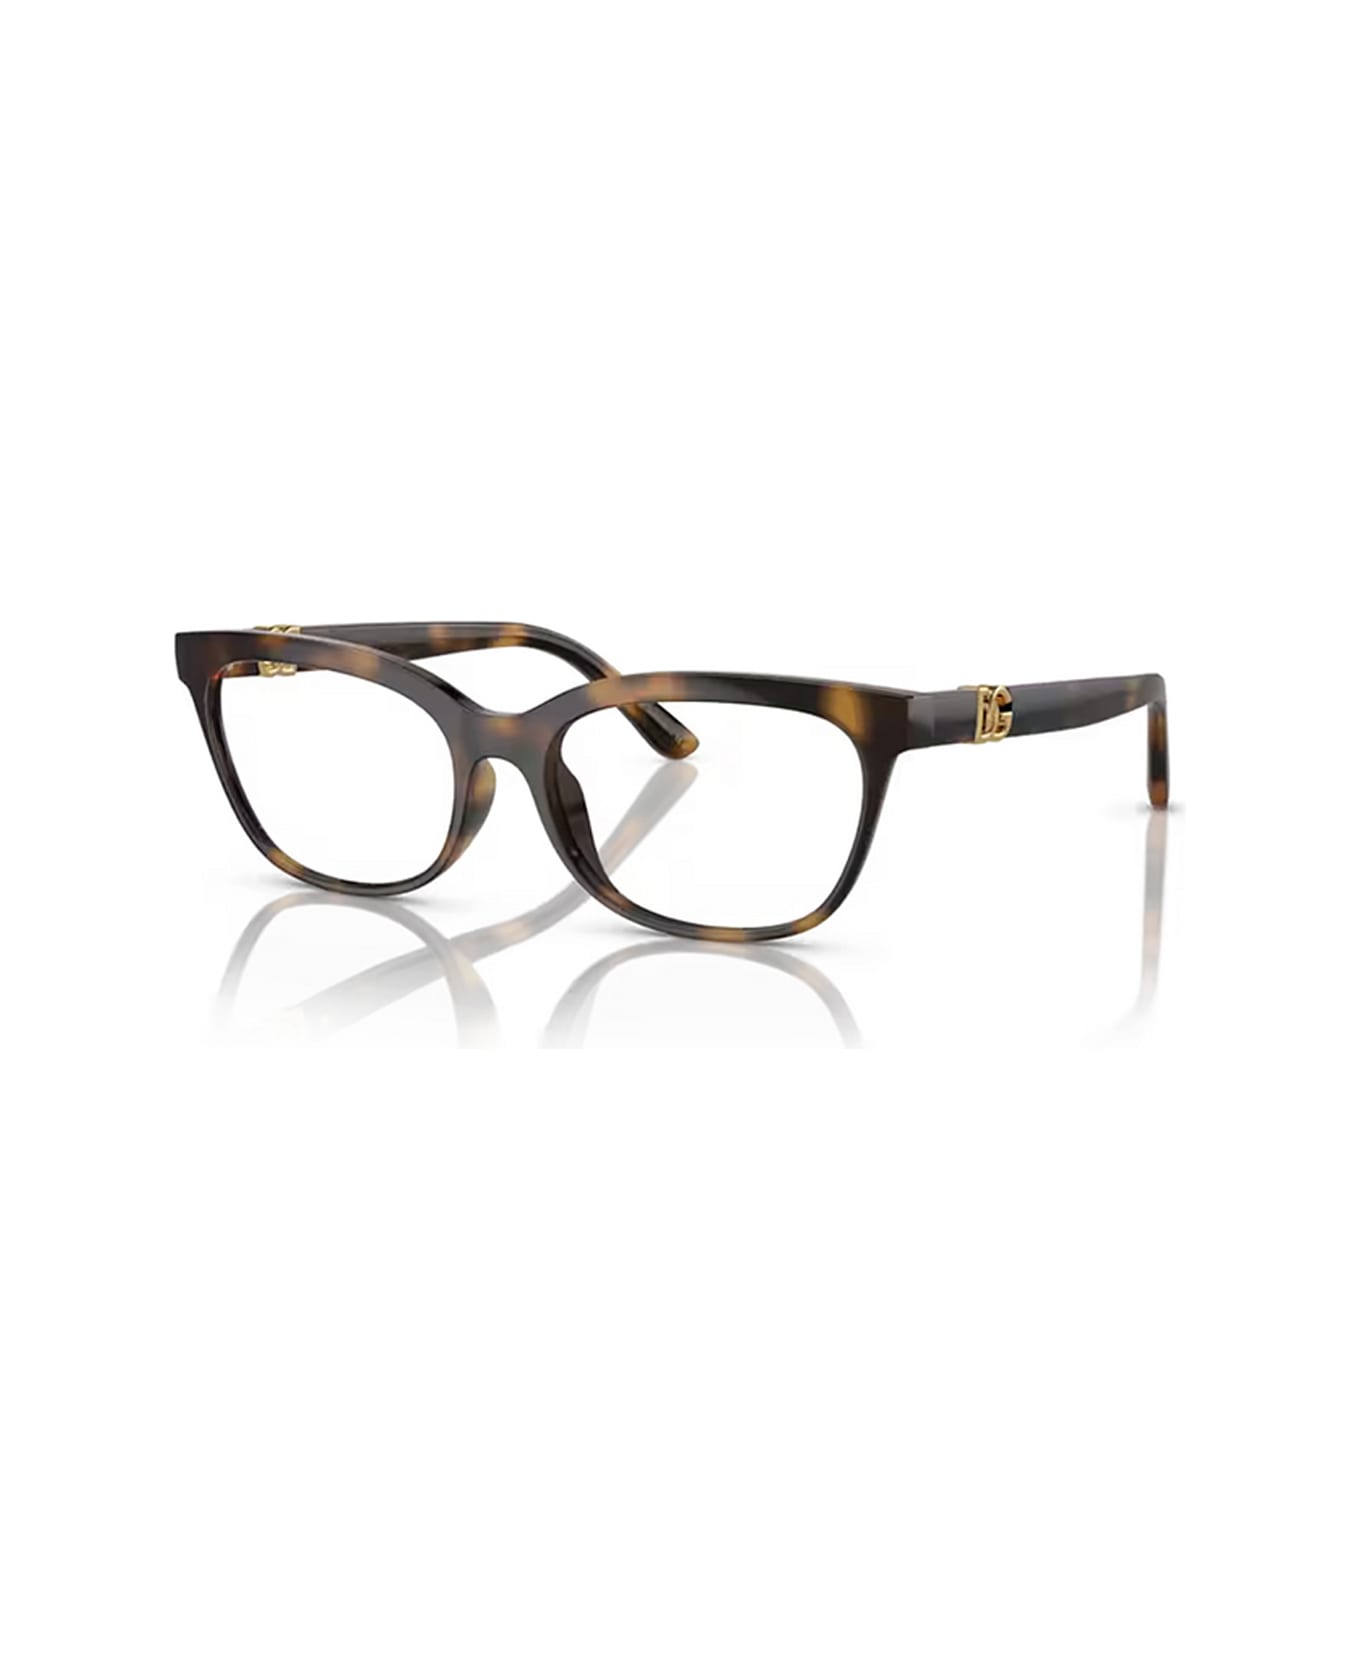 Dolce & Gabbana Eyewear Dg5106u 502 Glasses - Marrone アイウェア